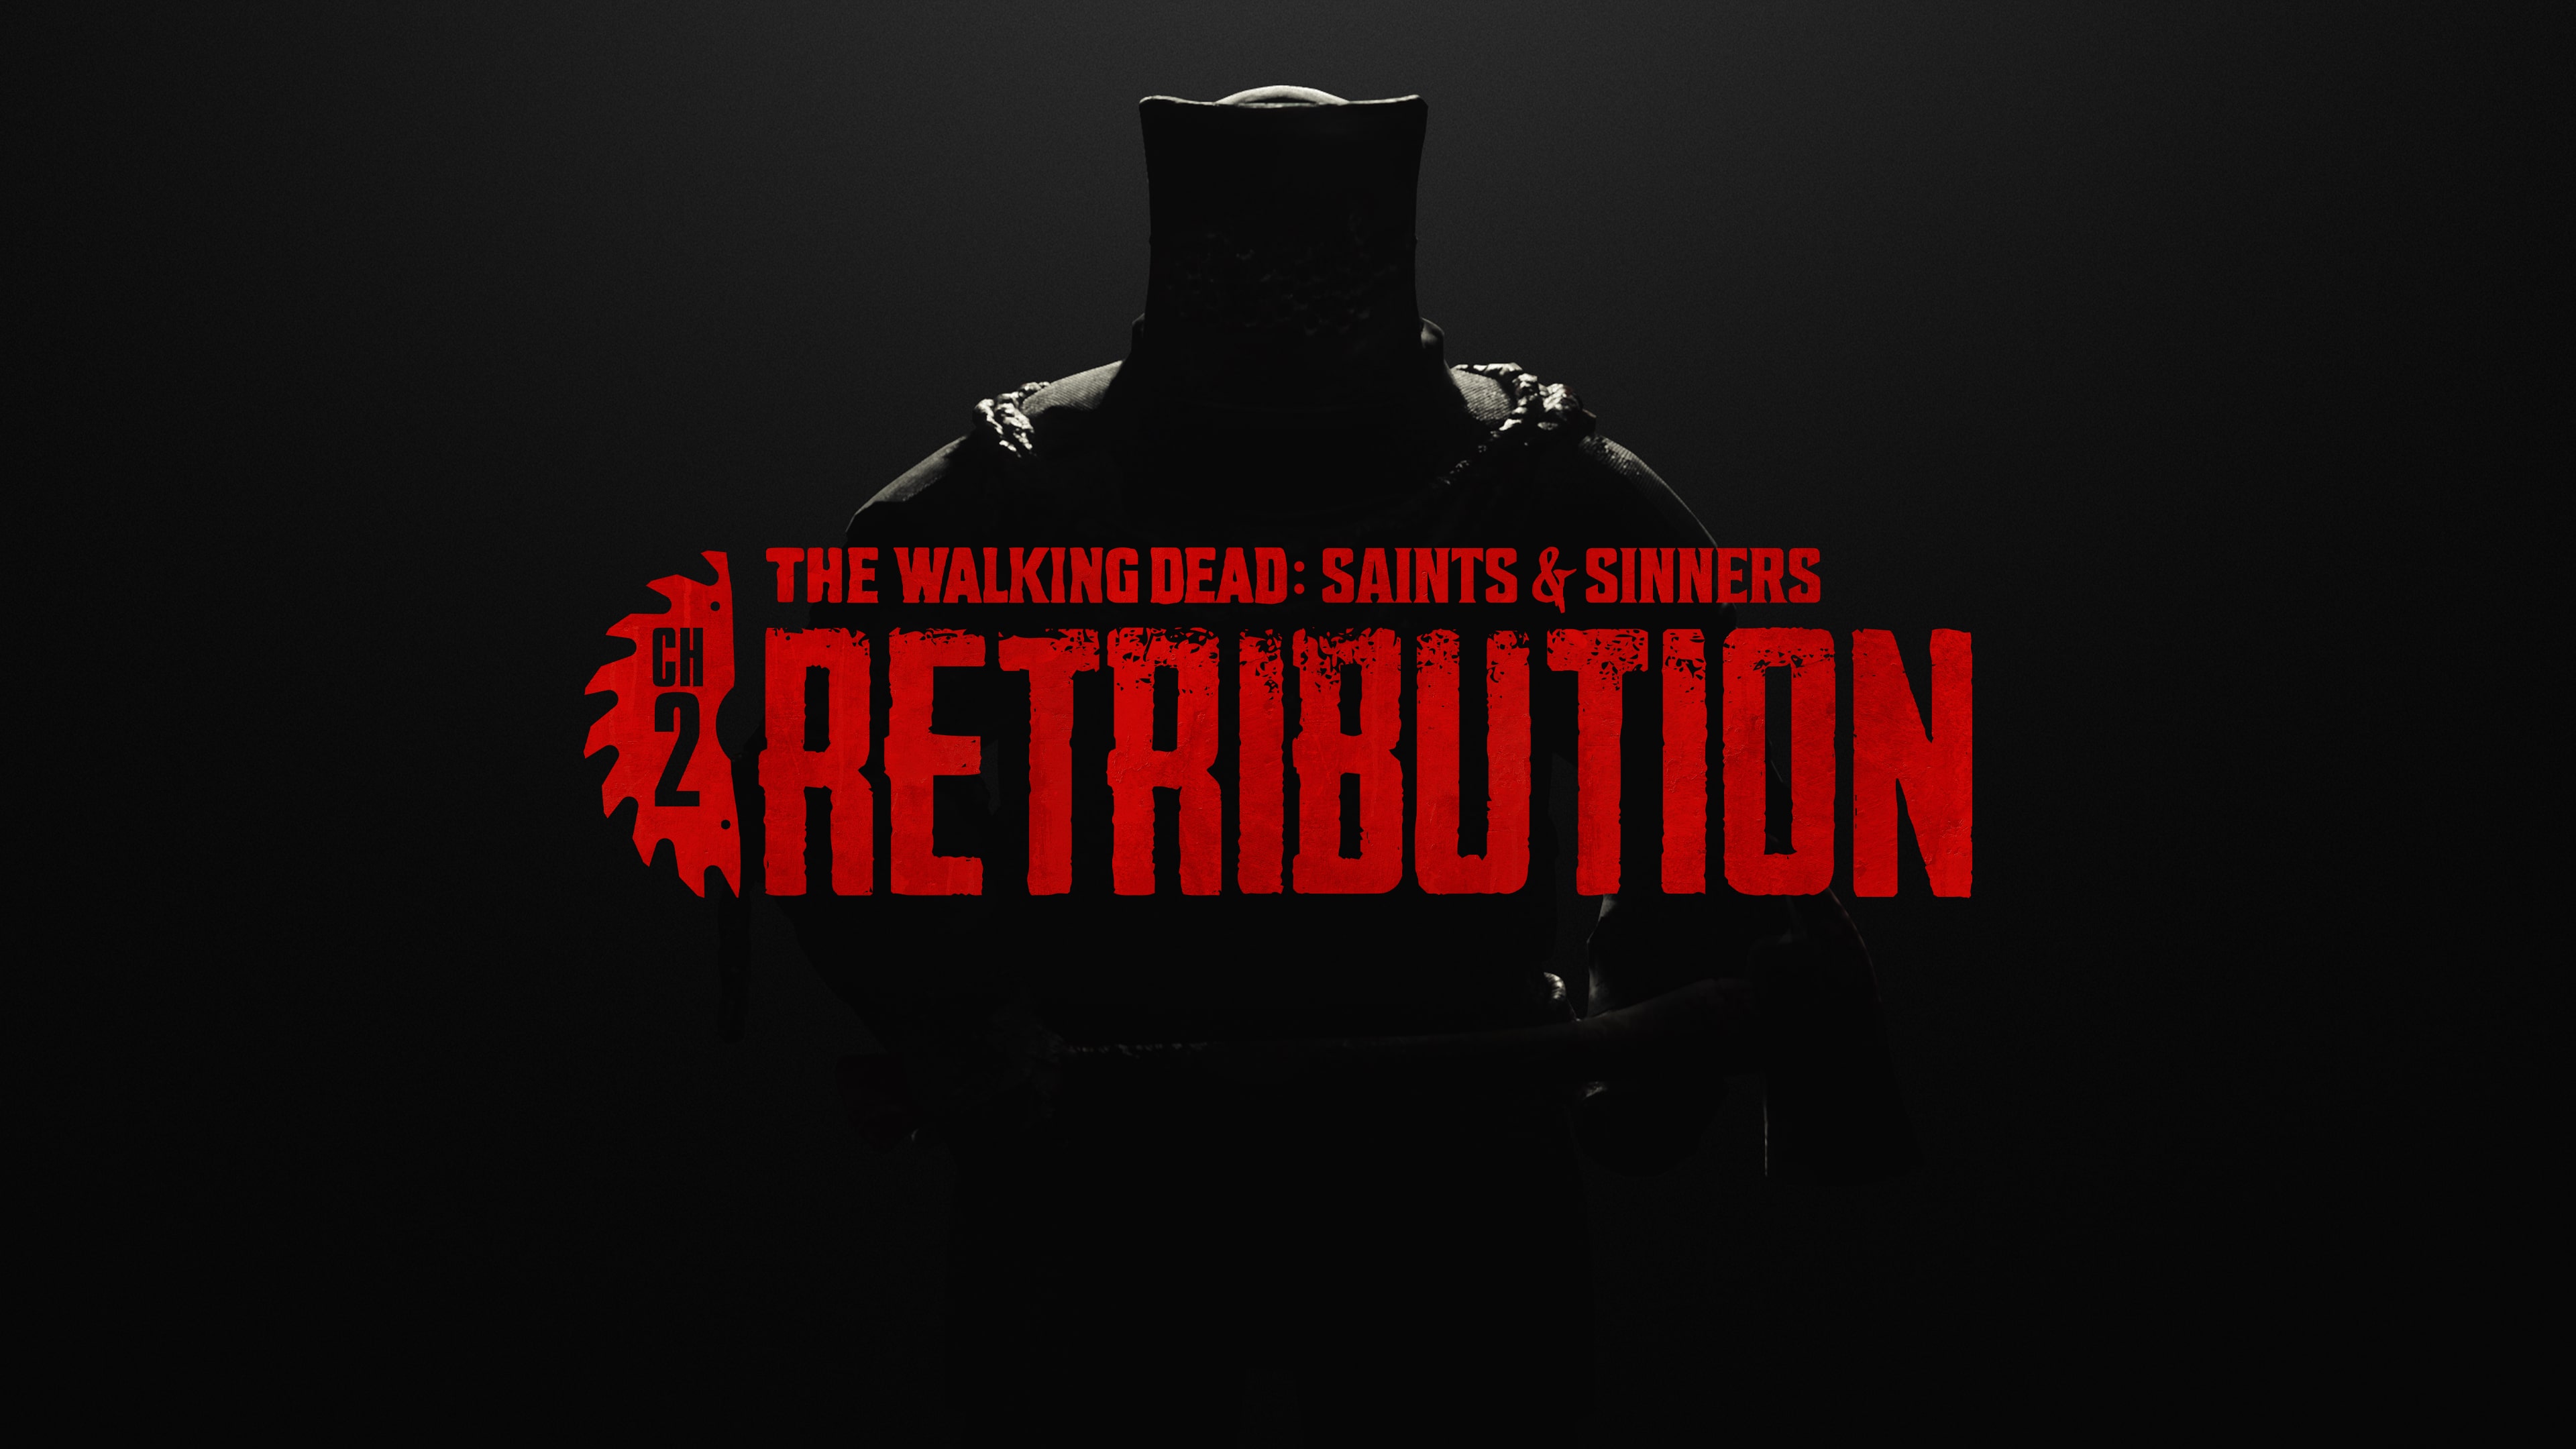 The Walking Dead: Saints & Sinners - Chapter 2: Retribution (한국어판)